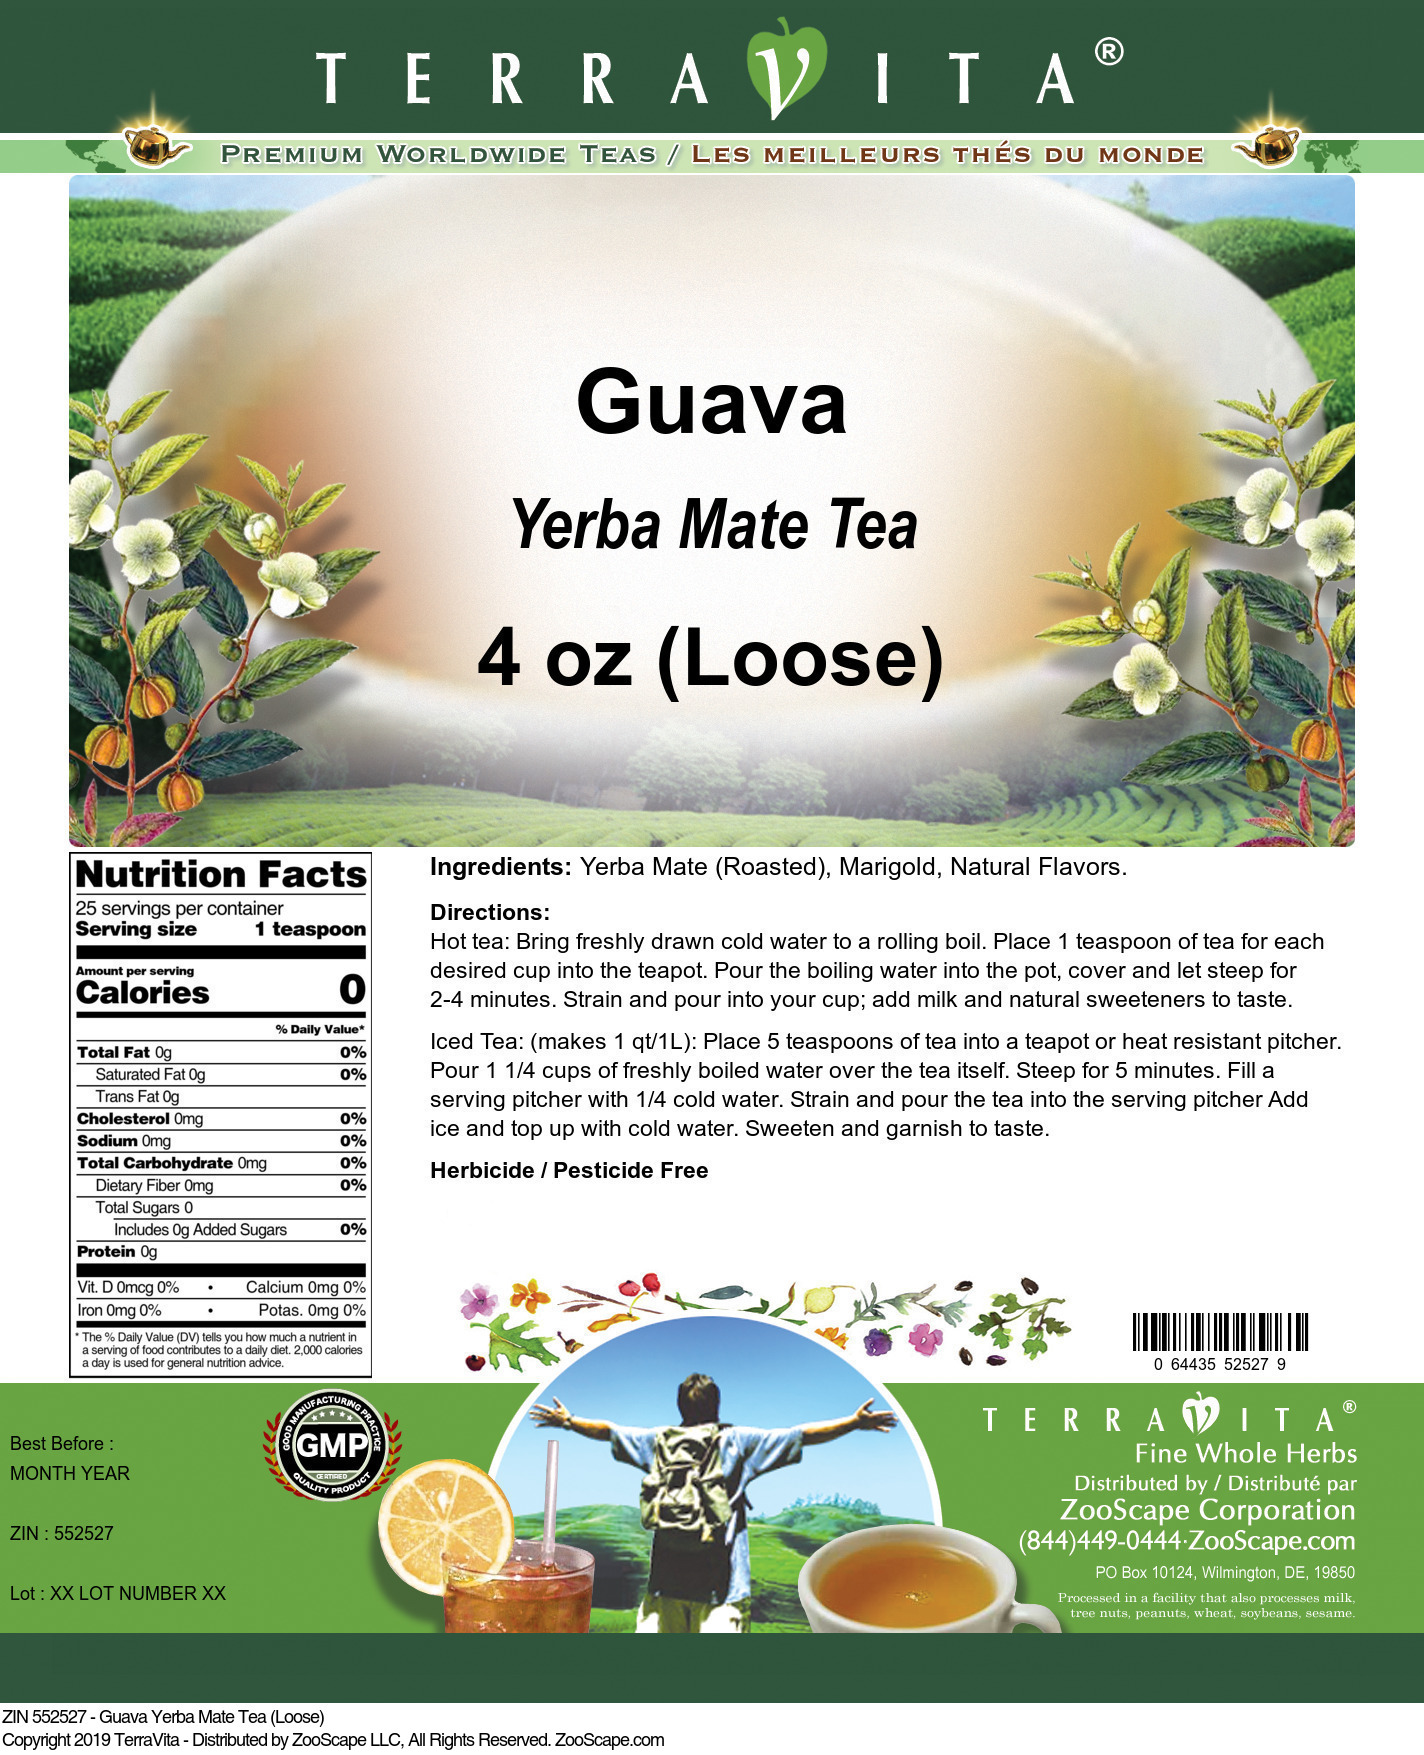 Guava Yerba Mate Tea (Loose) - Label